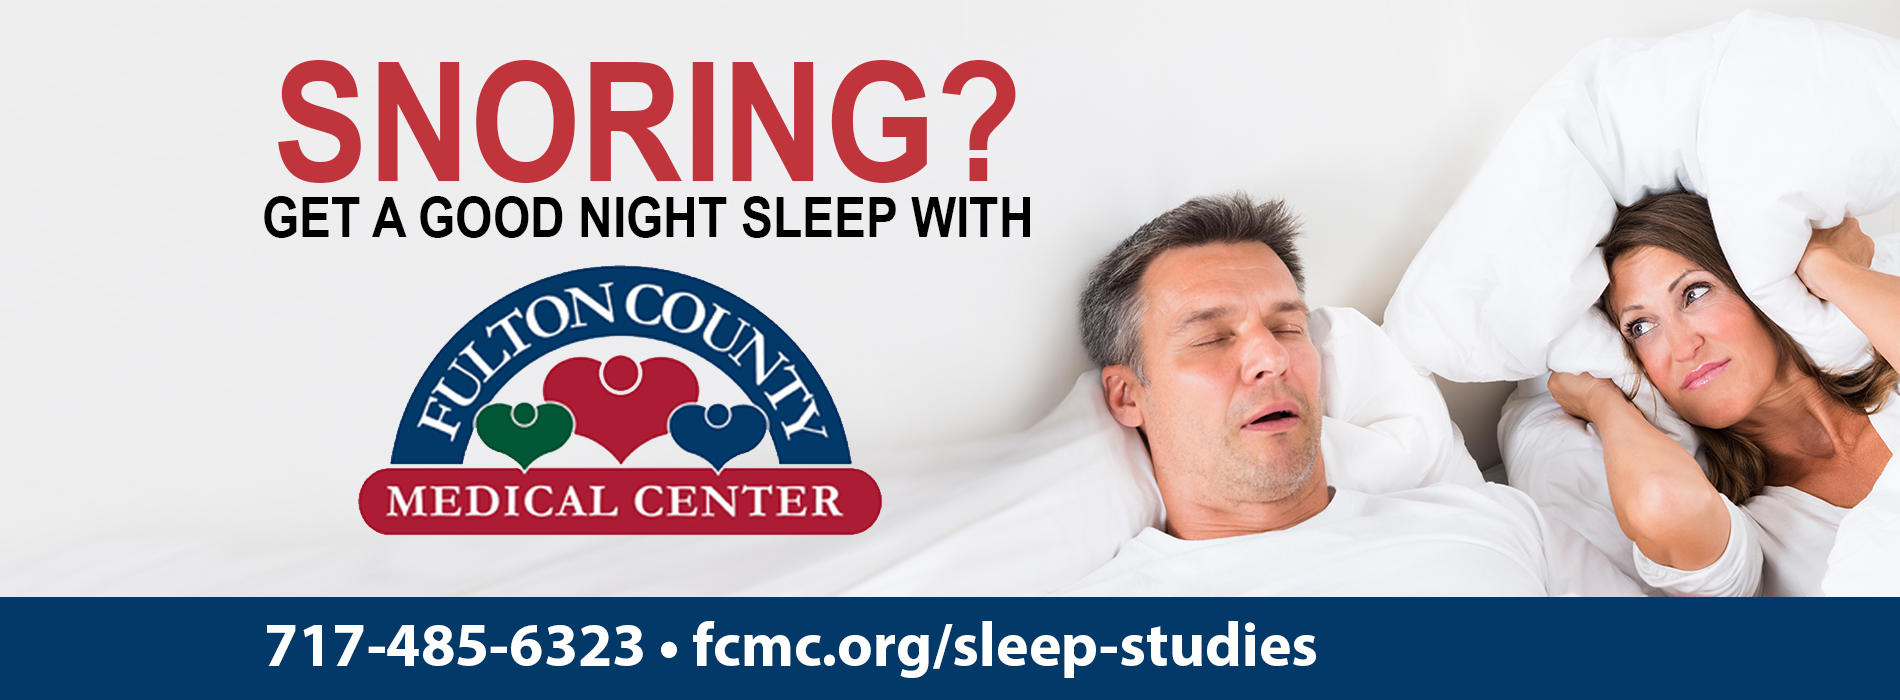 SNORING?
GET A GOOD NIGHT SLEEP WITH FULTON COUNTY MEDICAL CENTER

(717)-485-6323
fcmc.org/sleep-studies